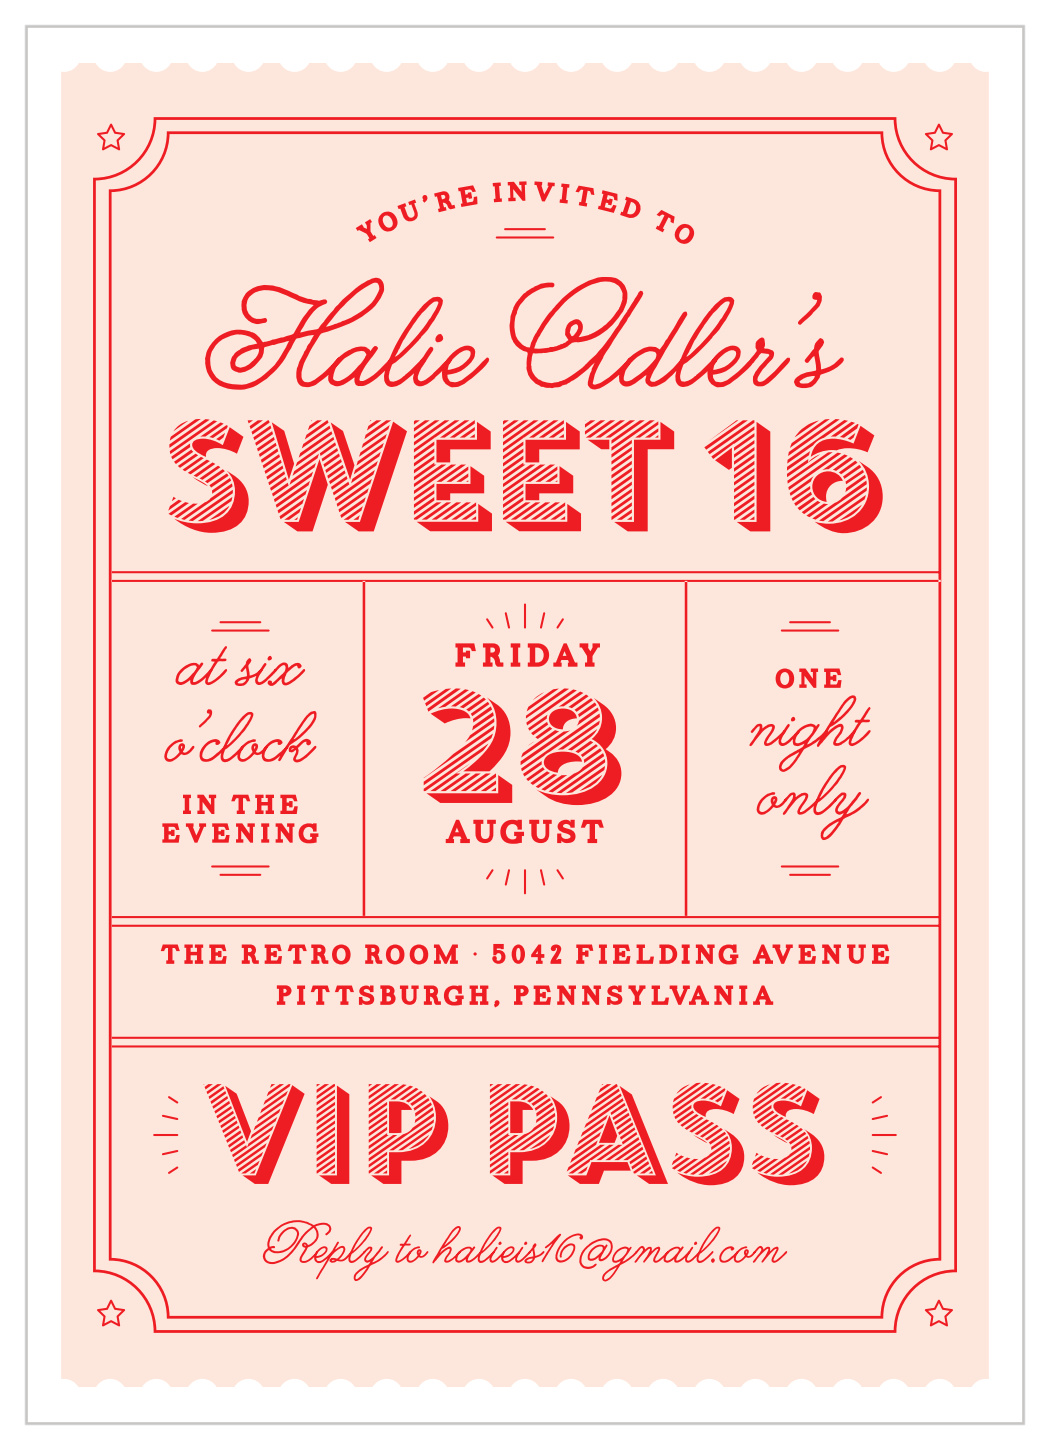 VIP Pass Sweet Sixteen Invitations